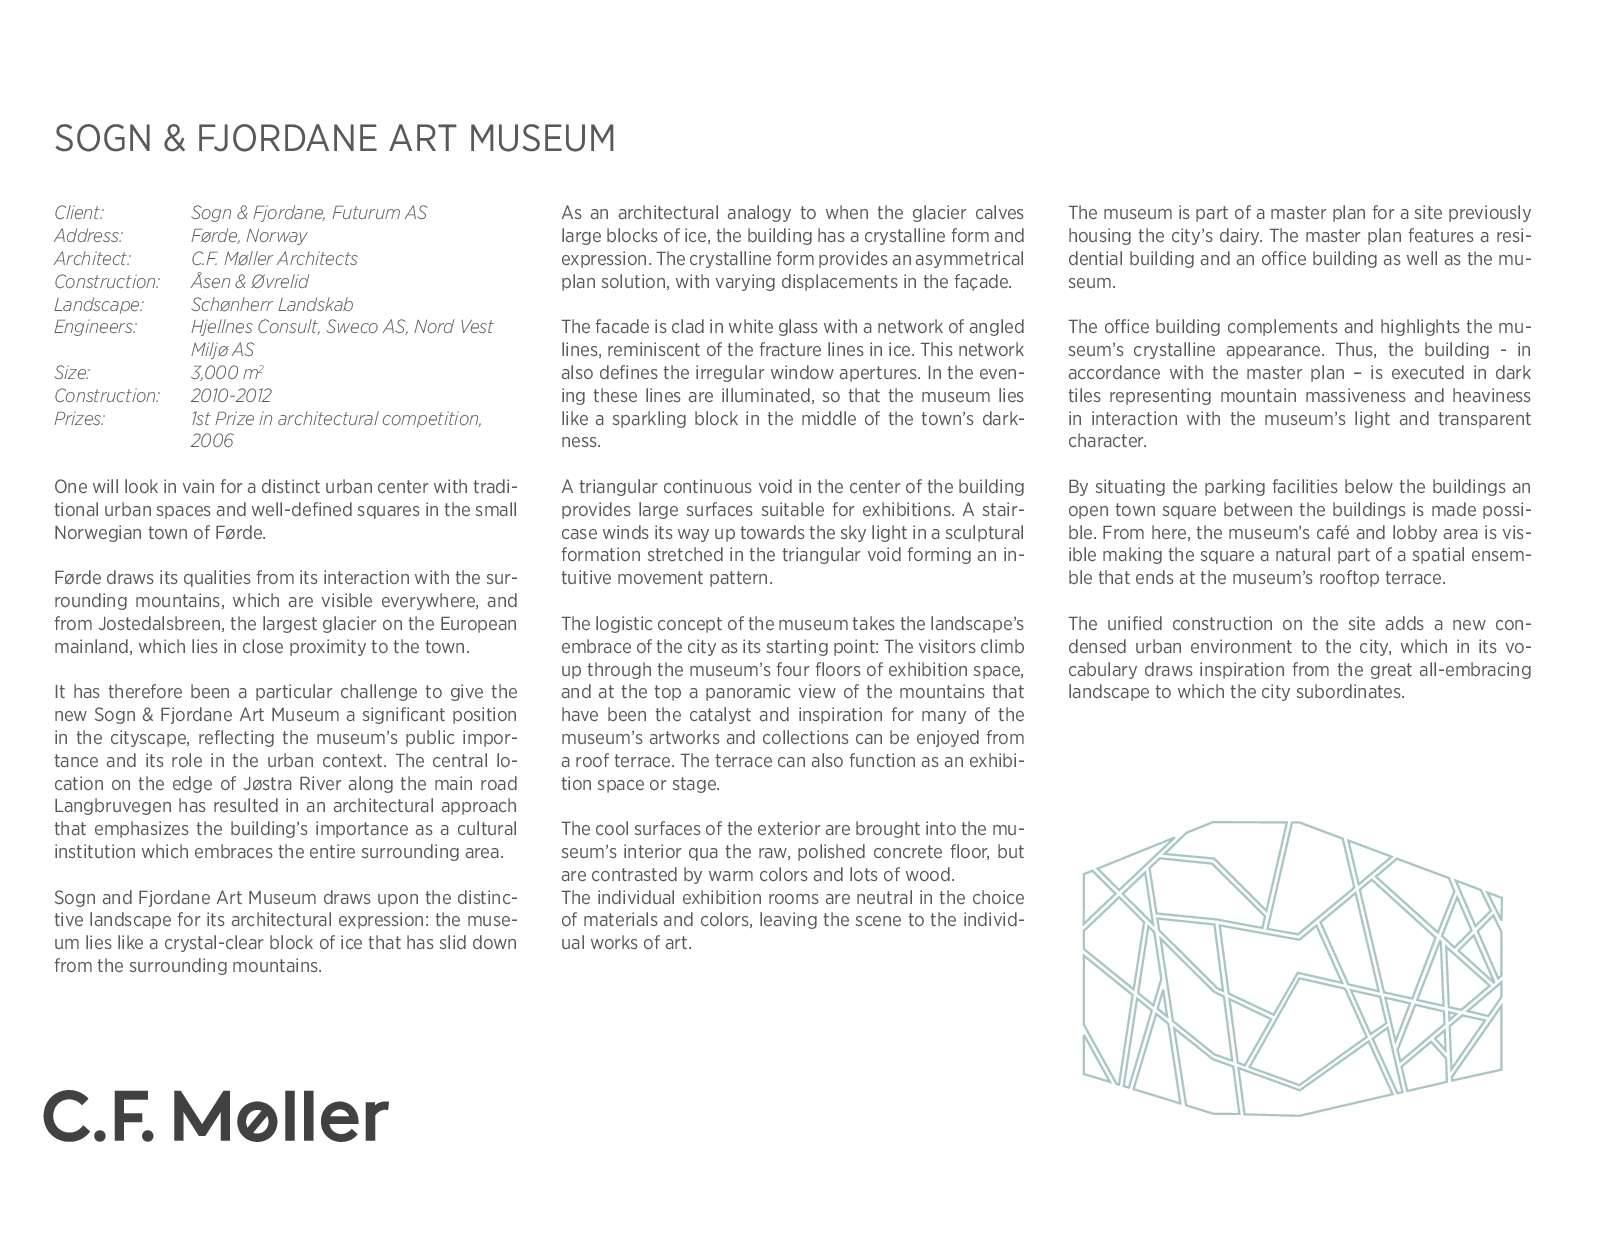 Sogn & Fjordane Art Museum presentation